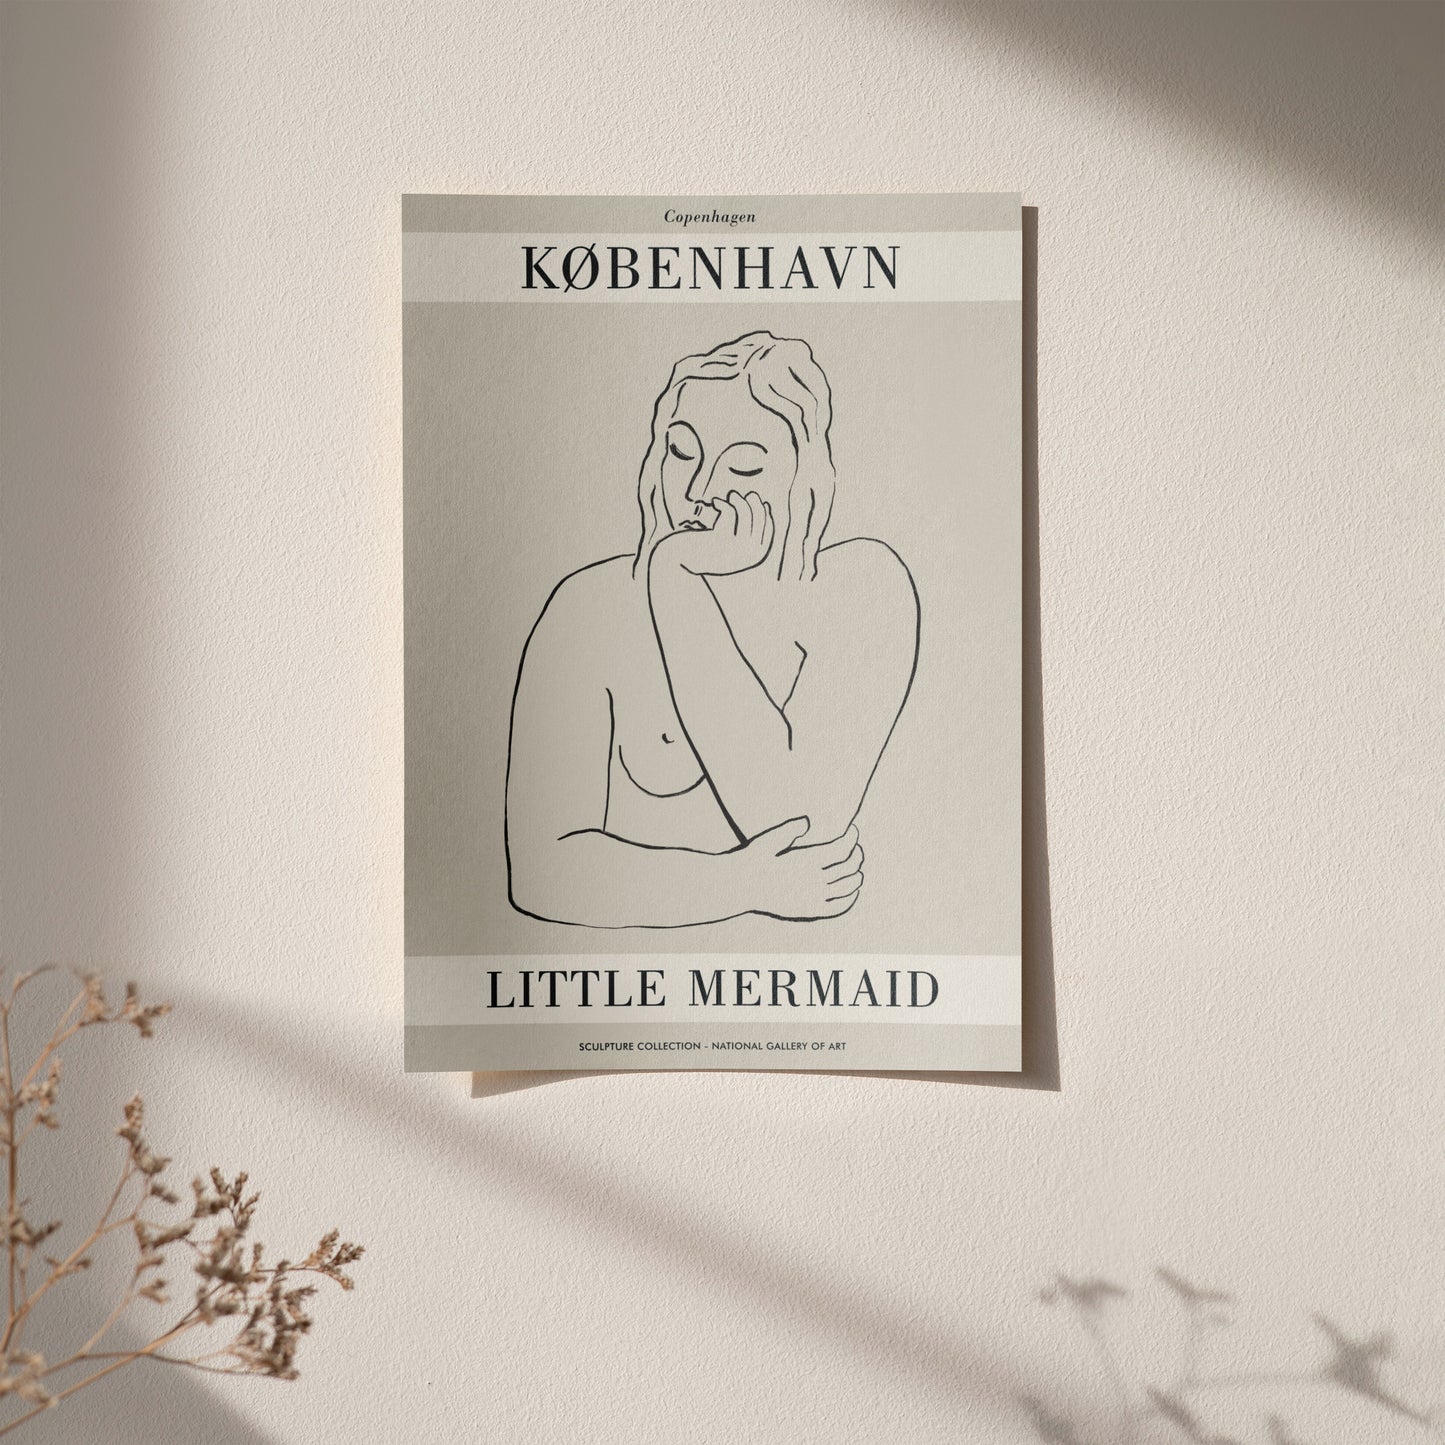 Little Mermaid, Copenhagen Poster